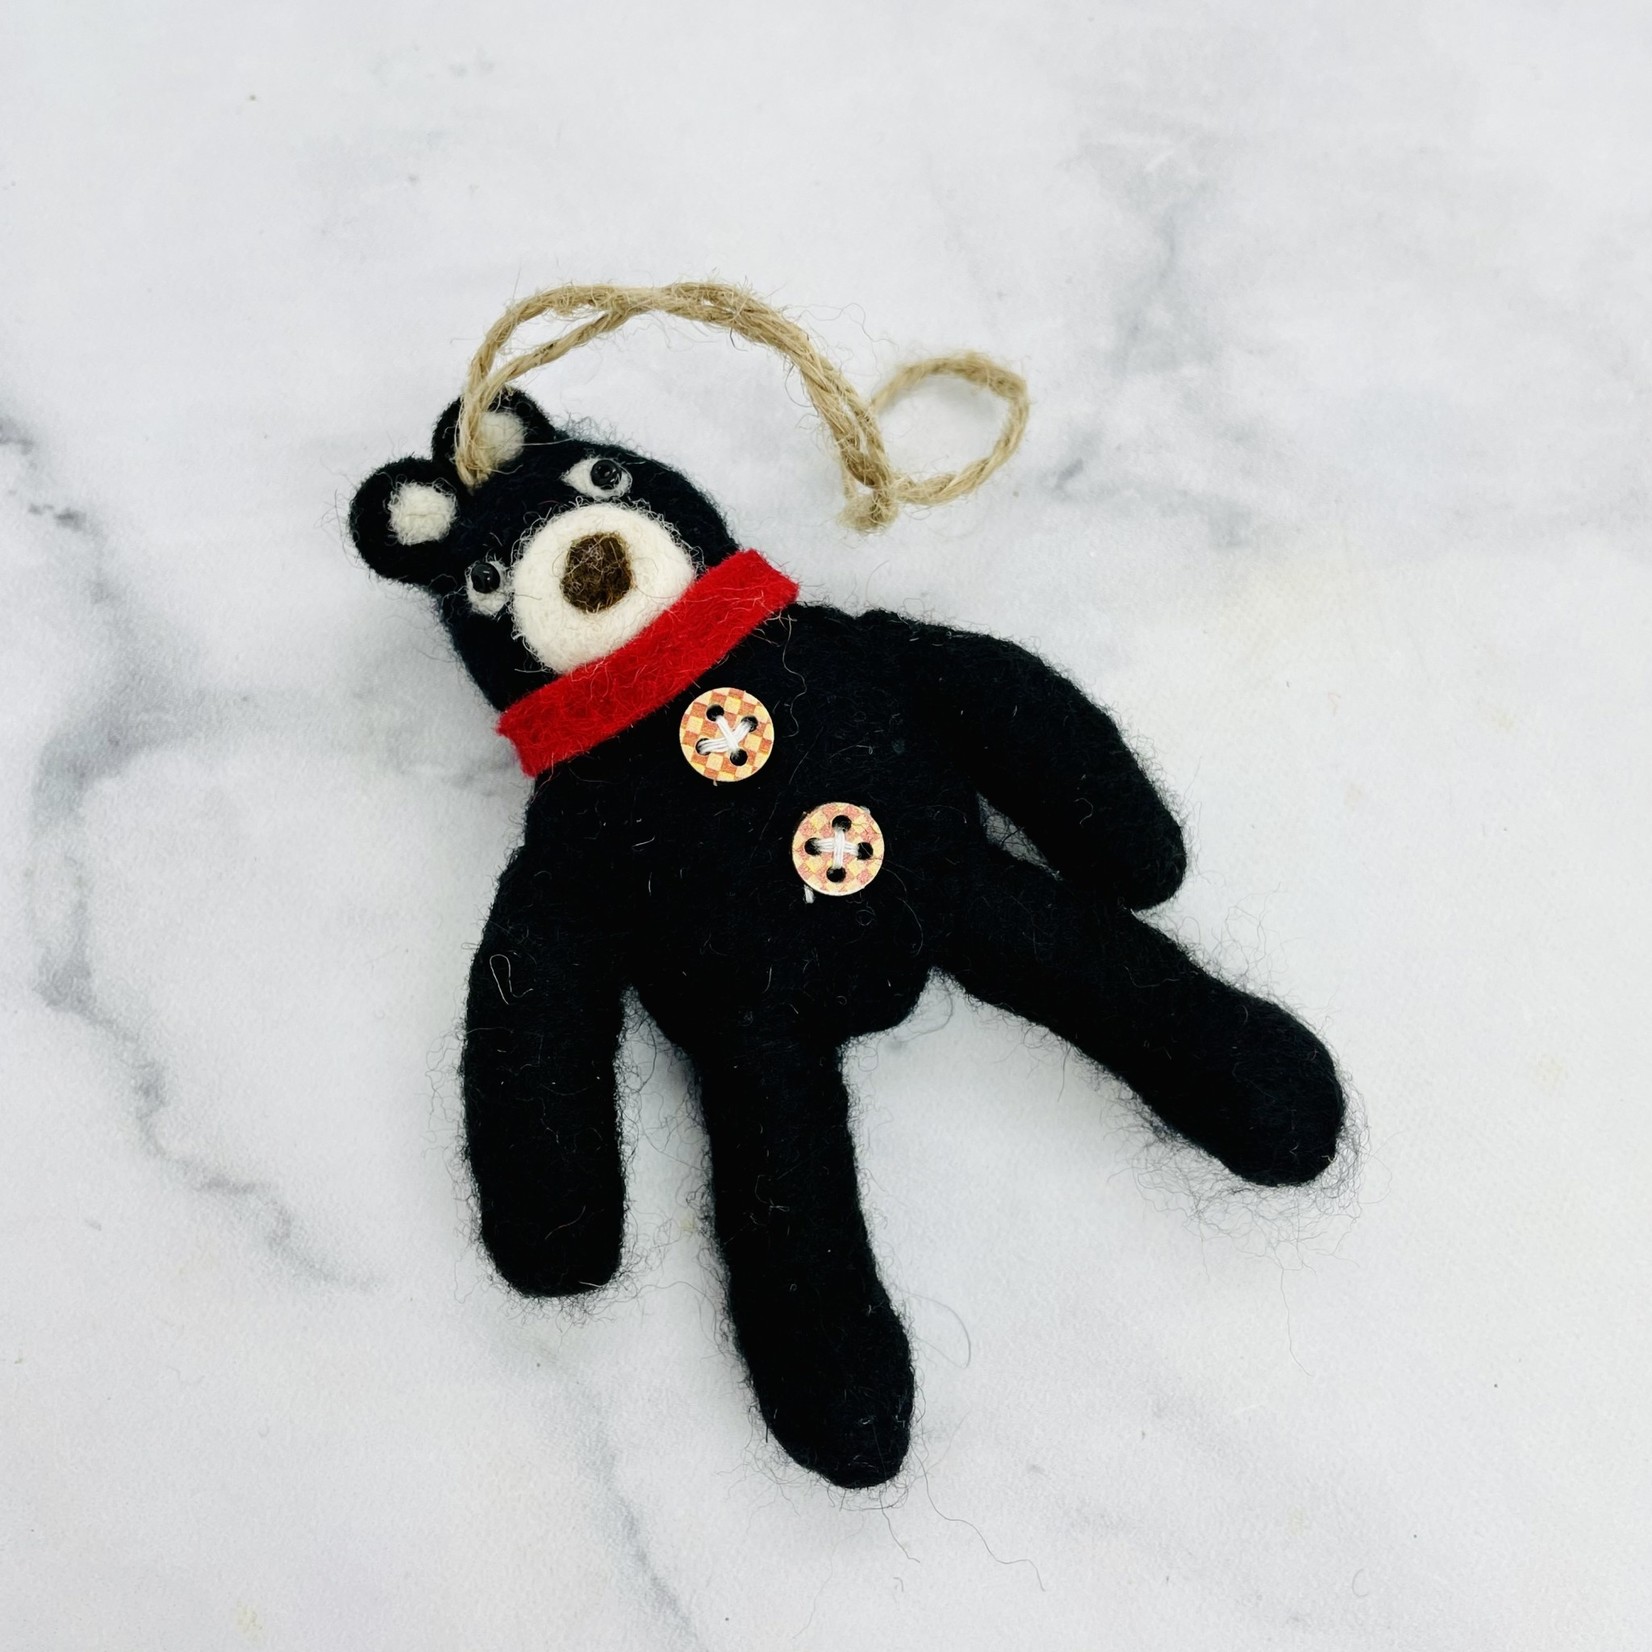 Wool Felt Bear Ornament w/ Scarf & Buttons 4"H